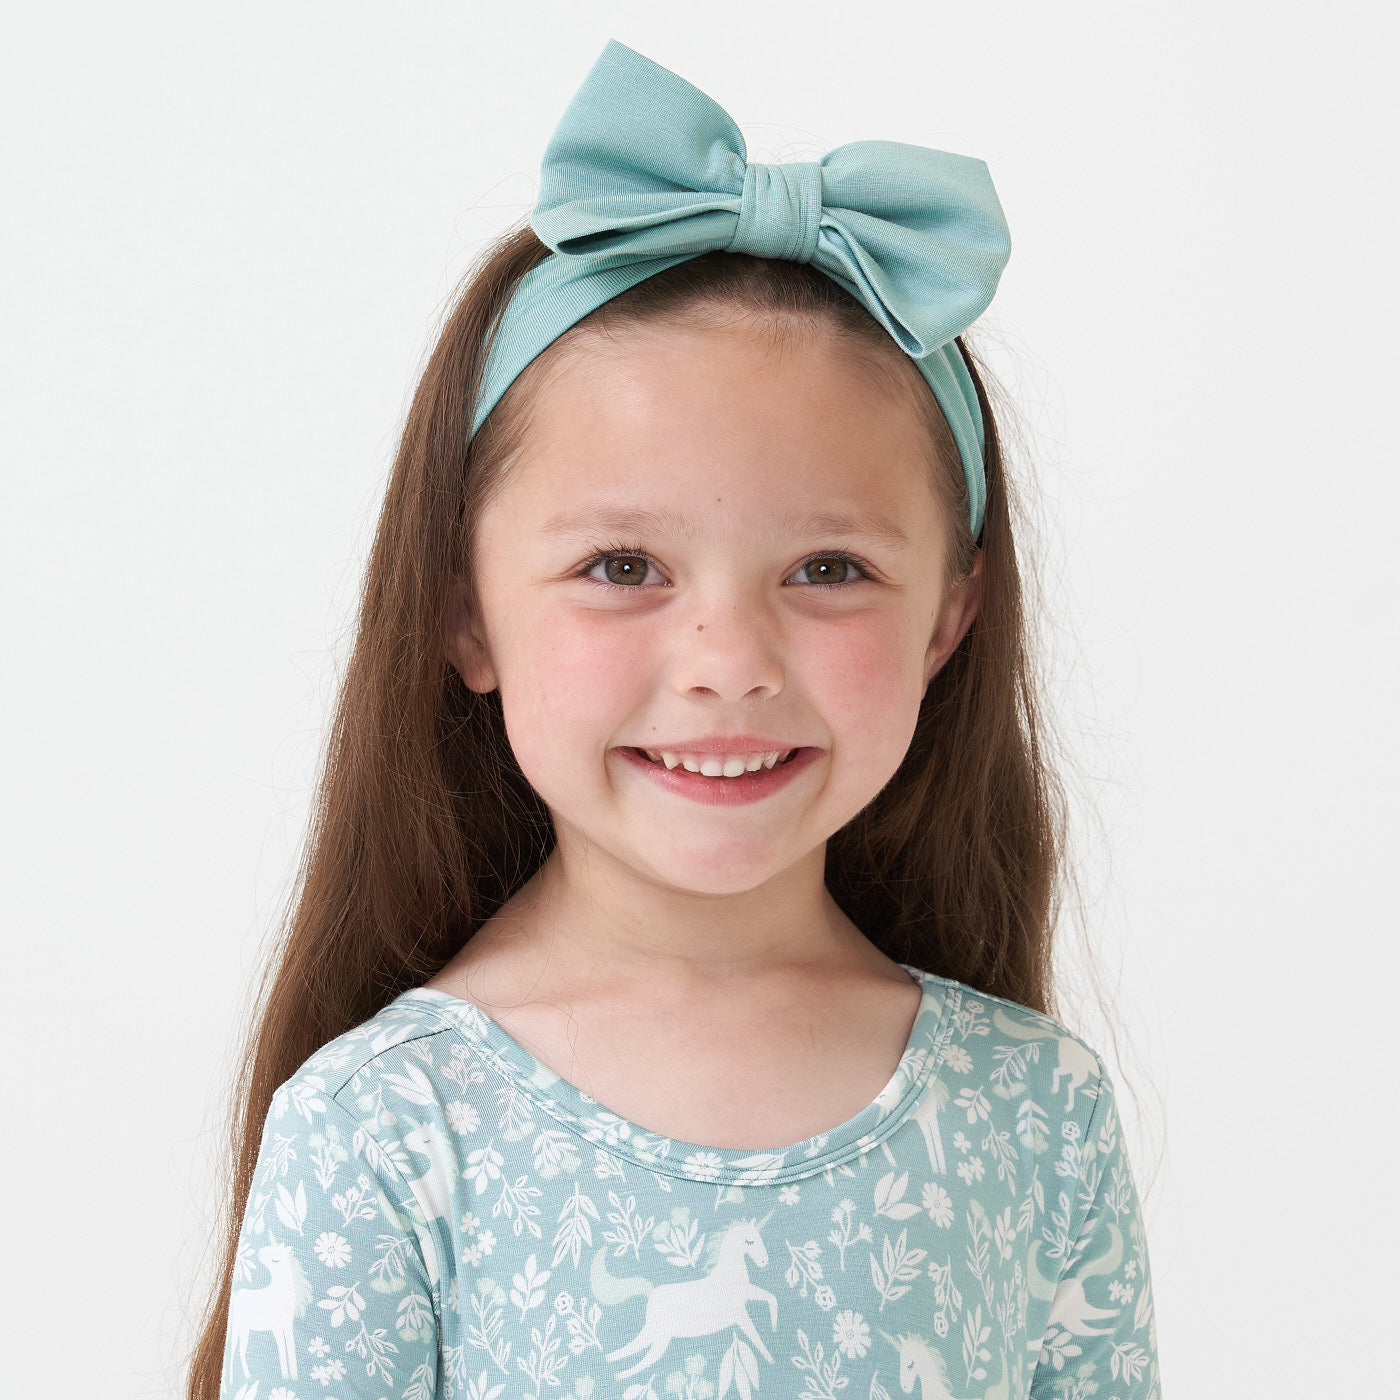 Child wearing an Aqua Mist luxe bow headband